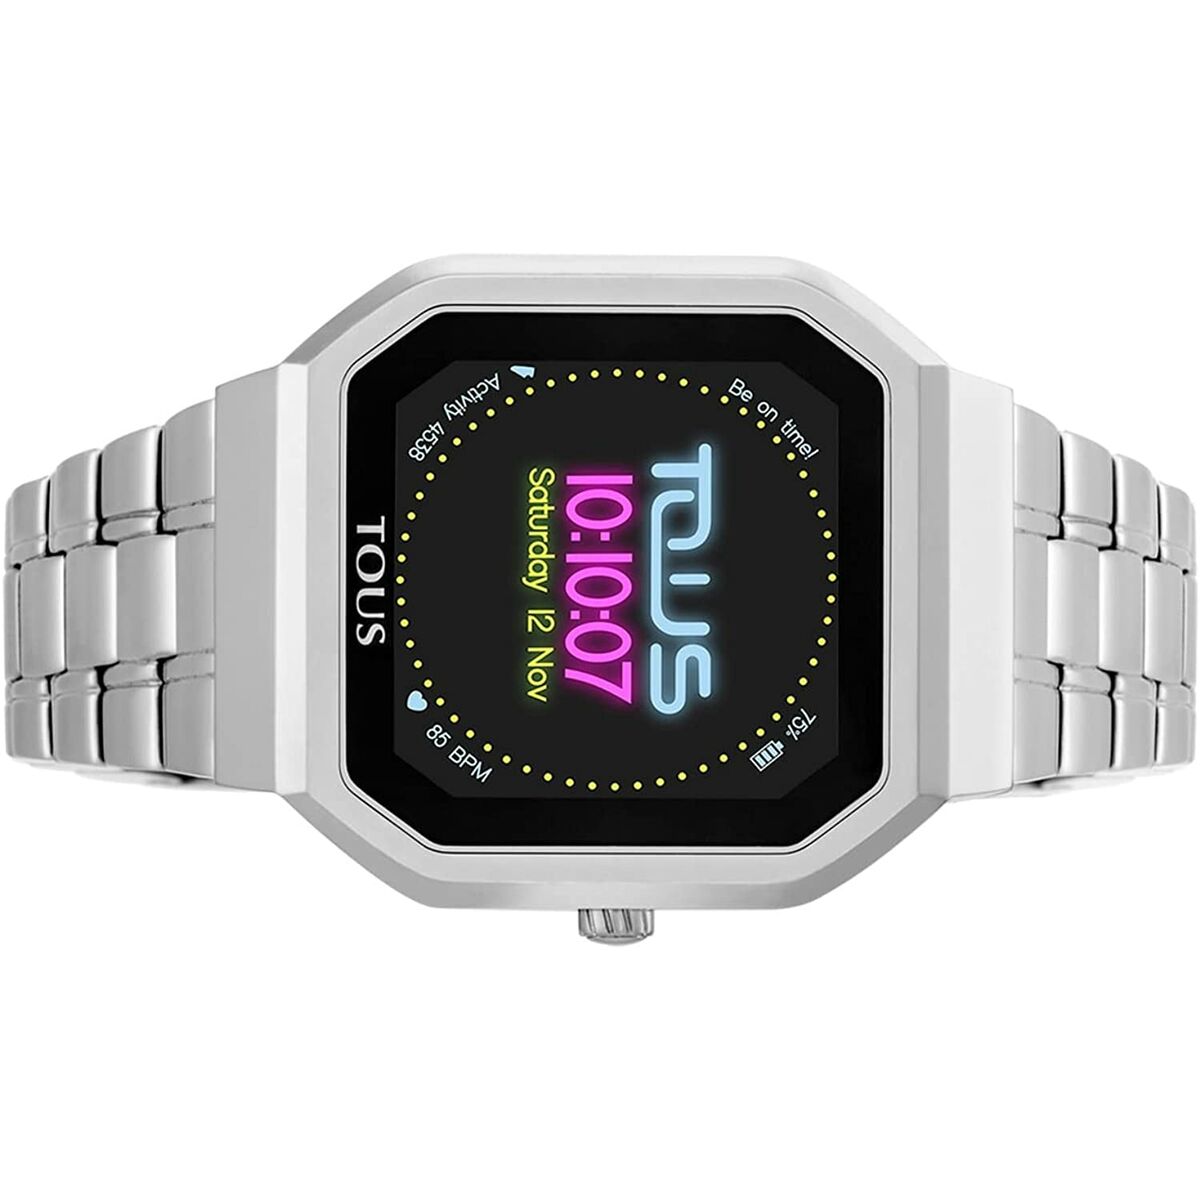 Smartwatch Tous 100350695 - CA International  